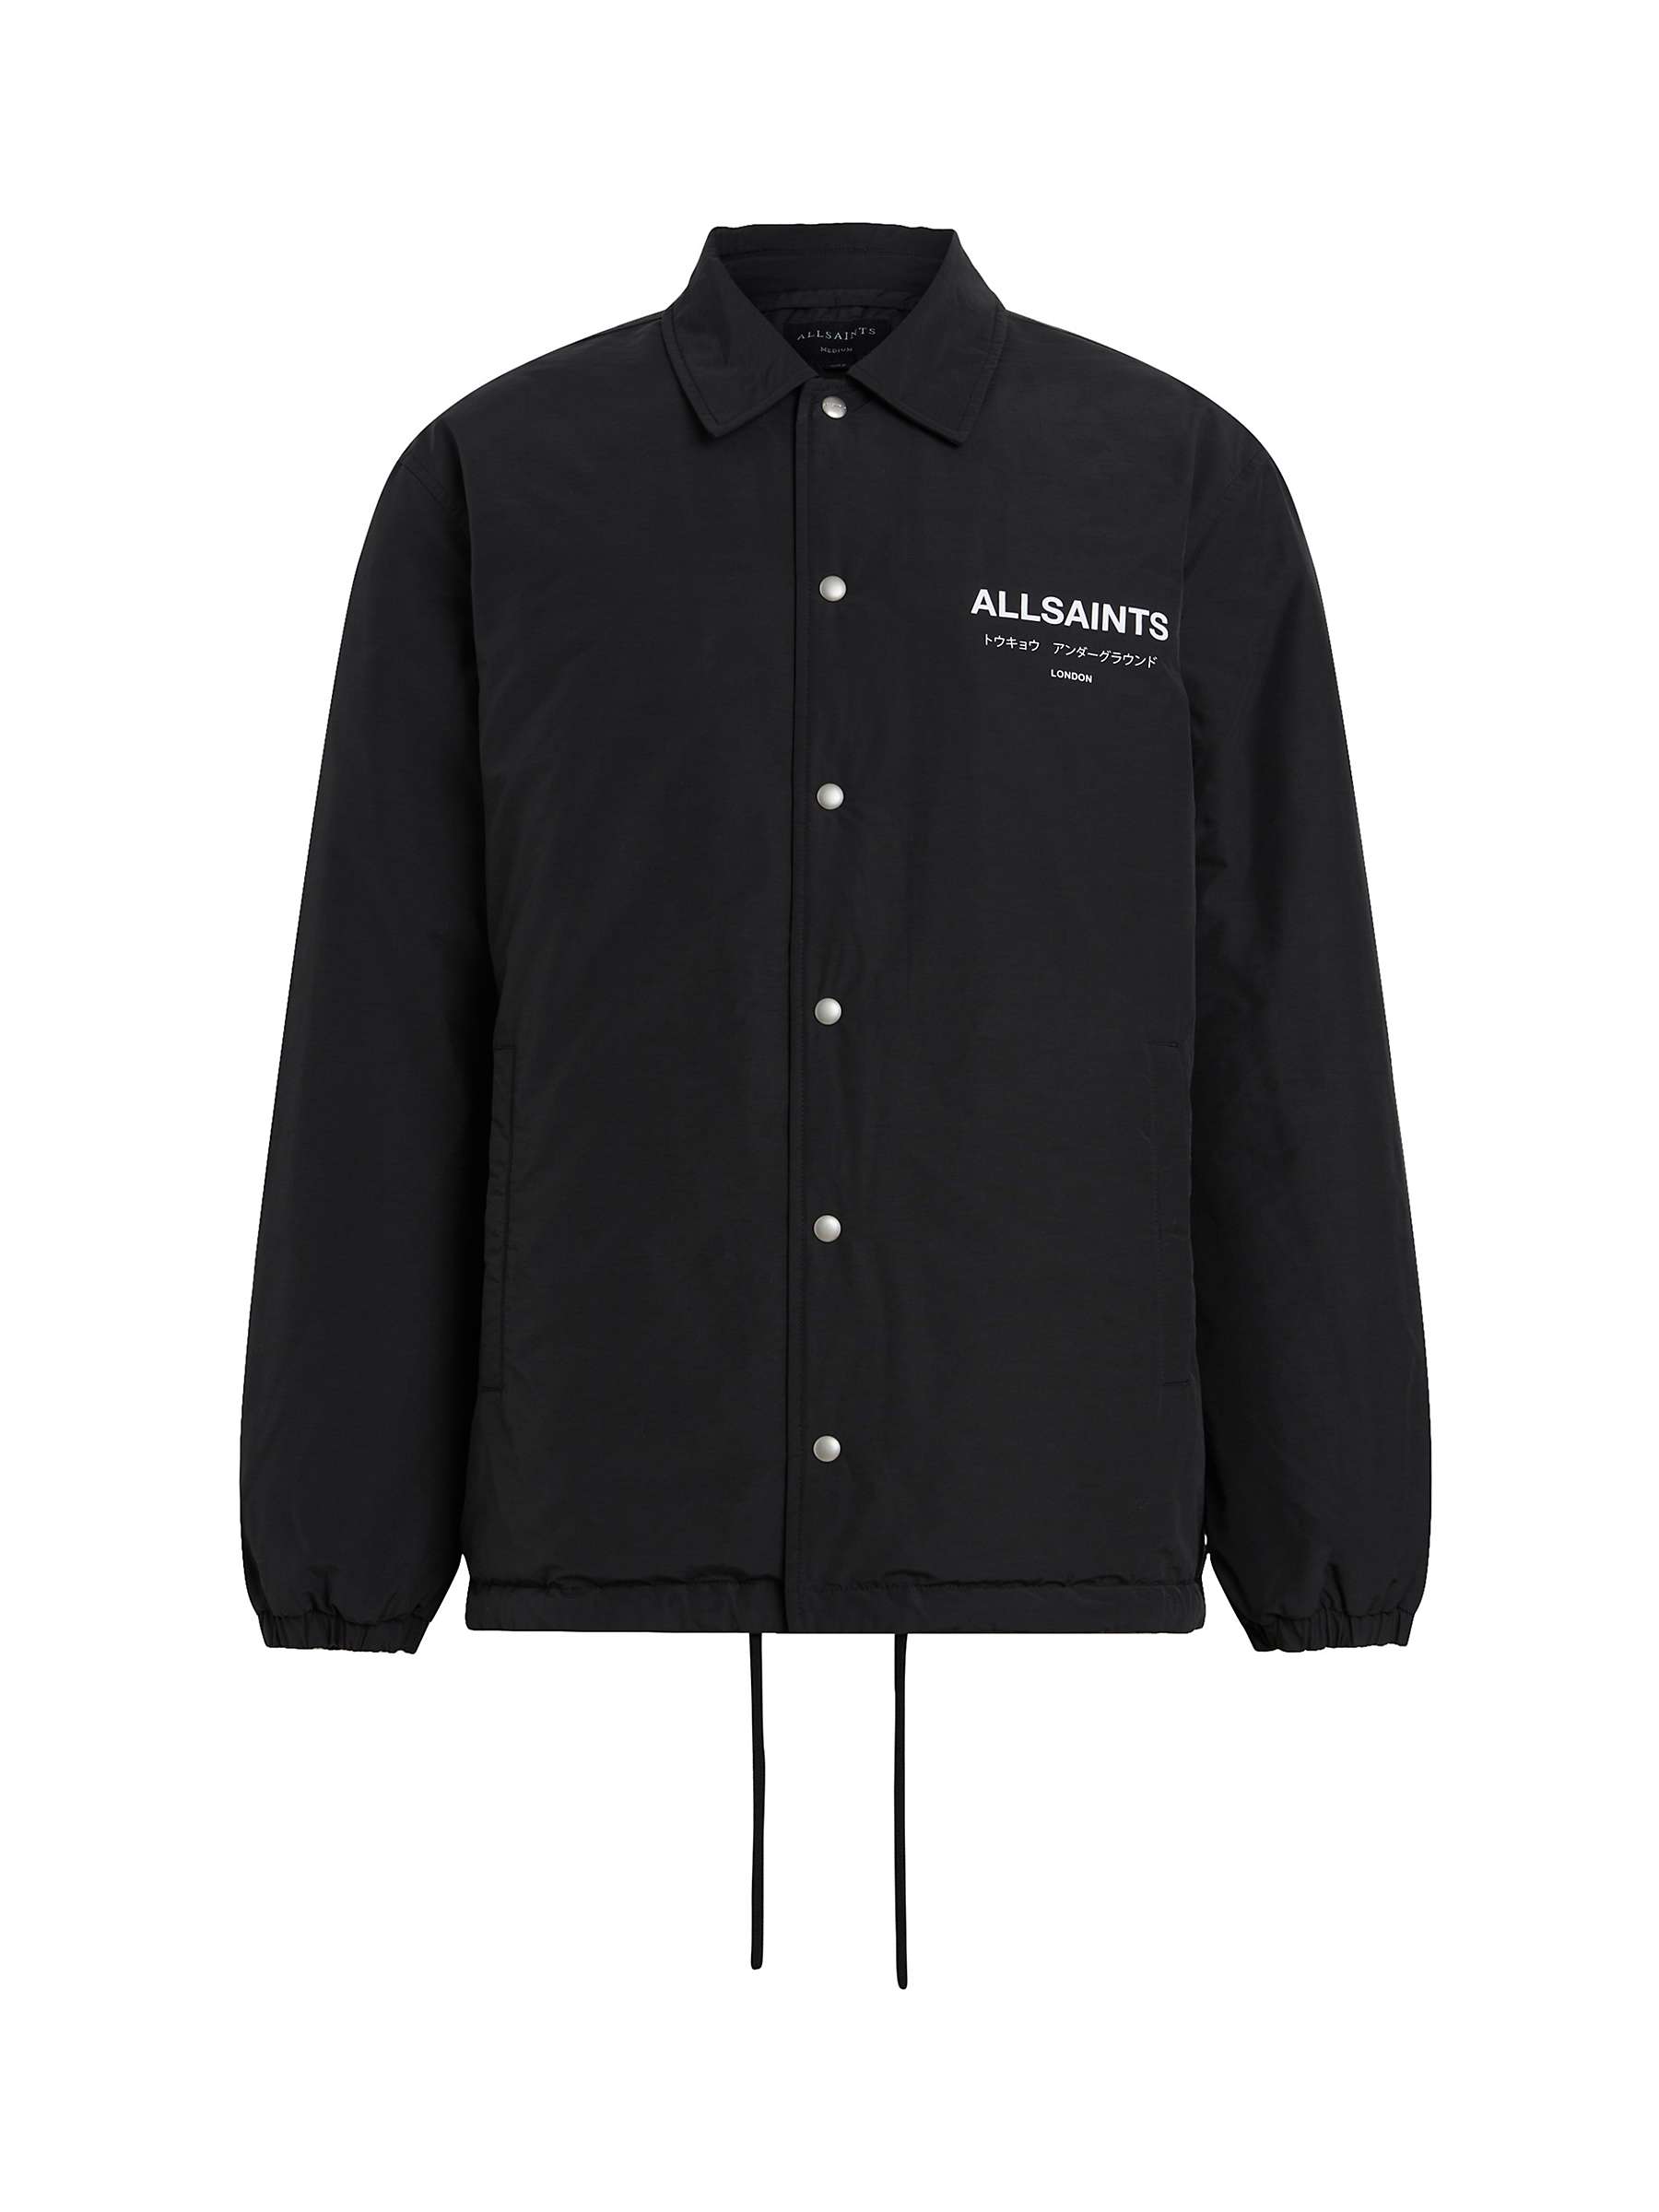 AllSaints Underground Coach Jacket, Black at John Lewis & Partners